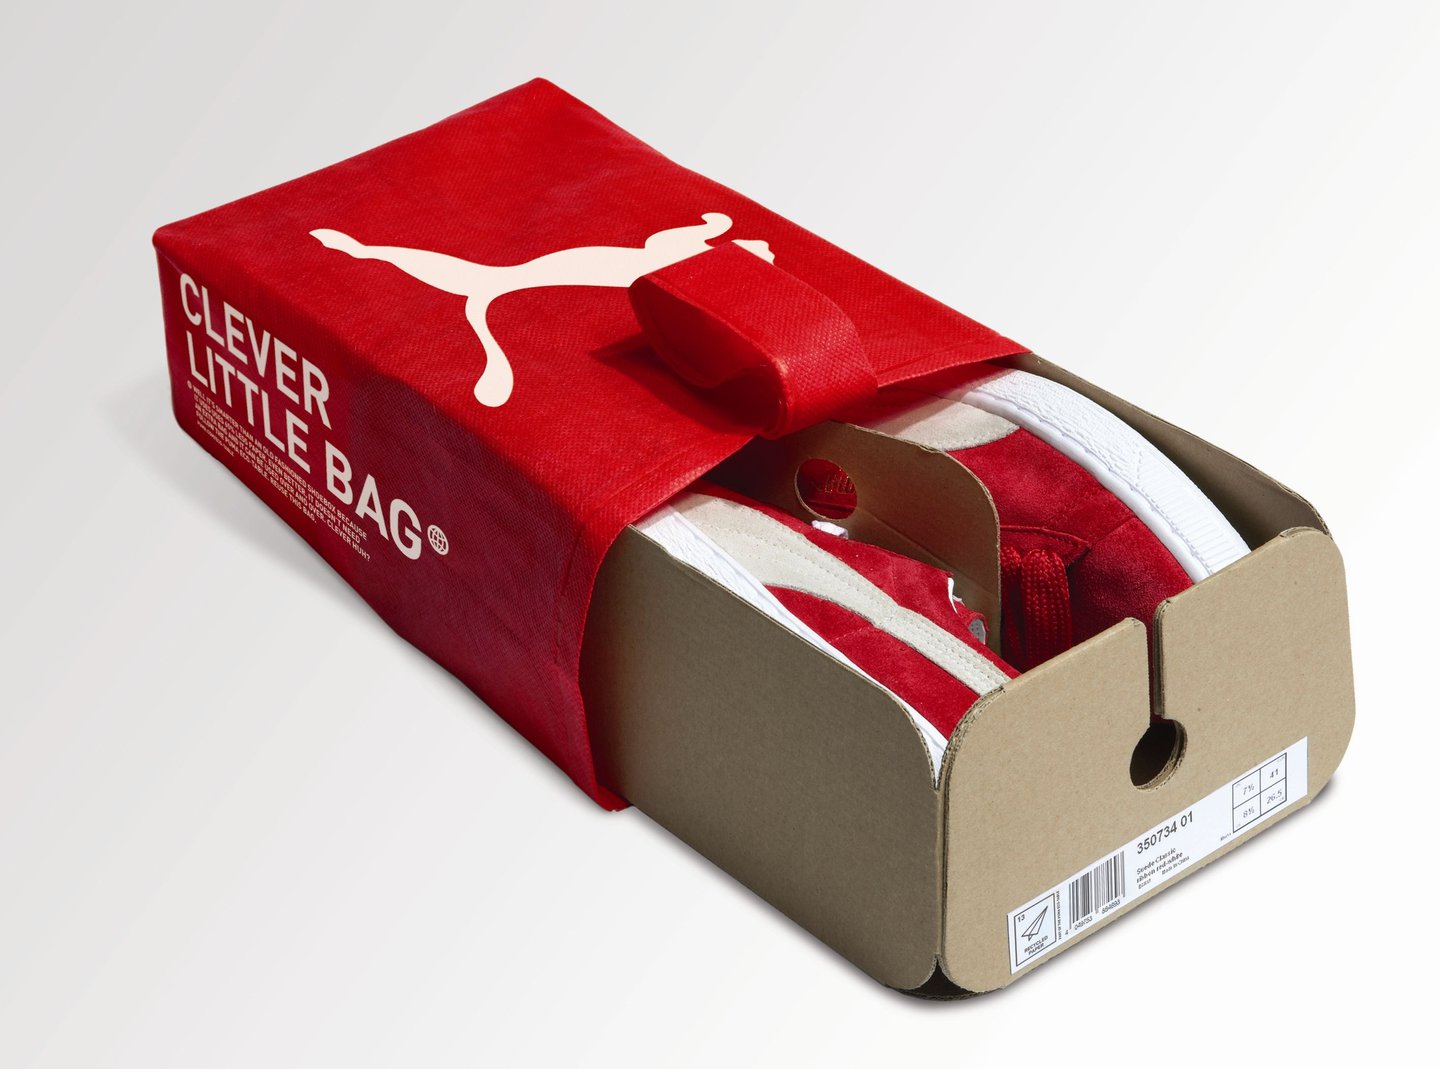 Resuable bag - eco - packaging.jpg